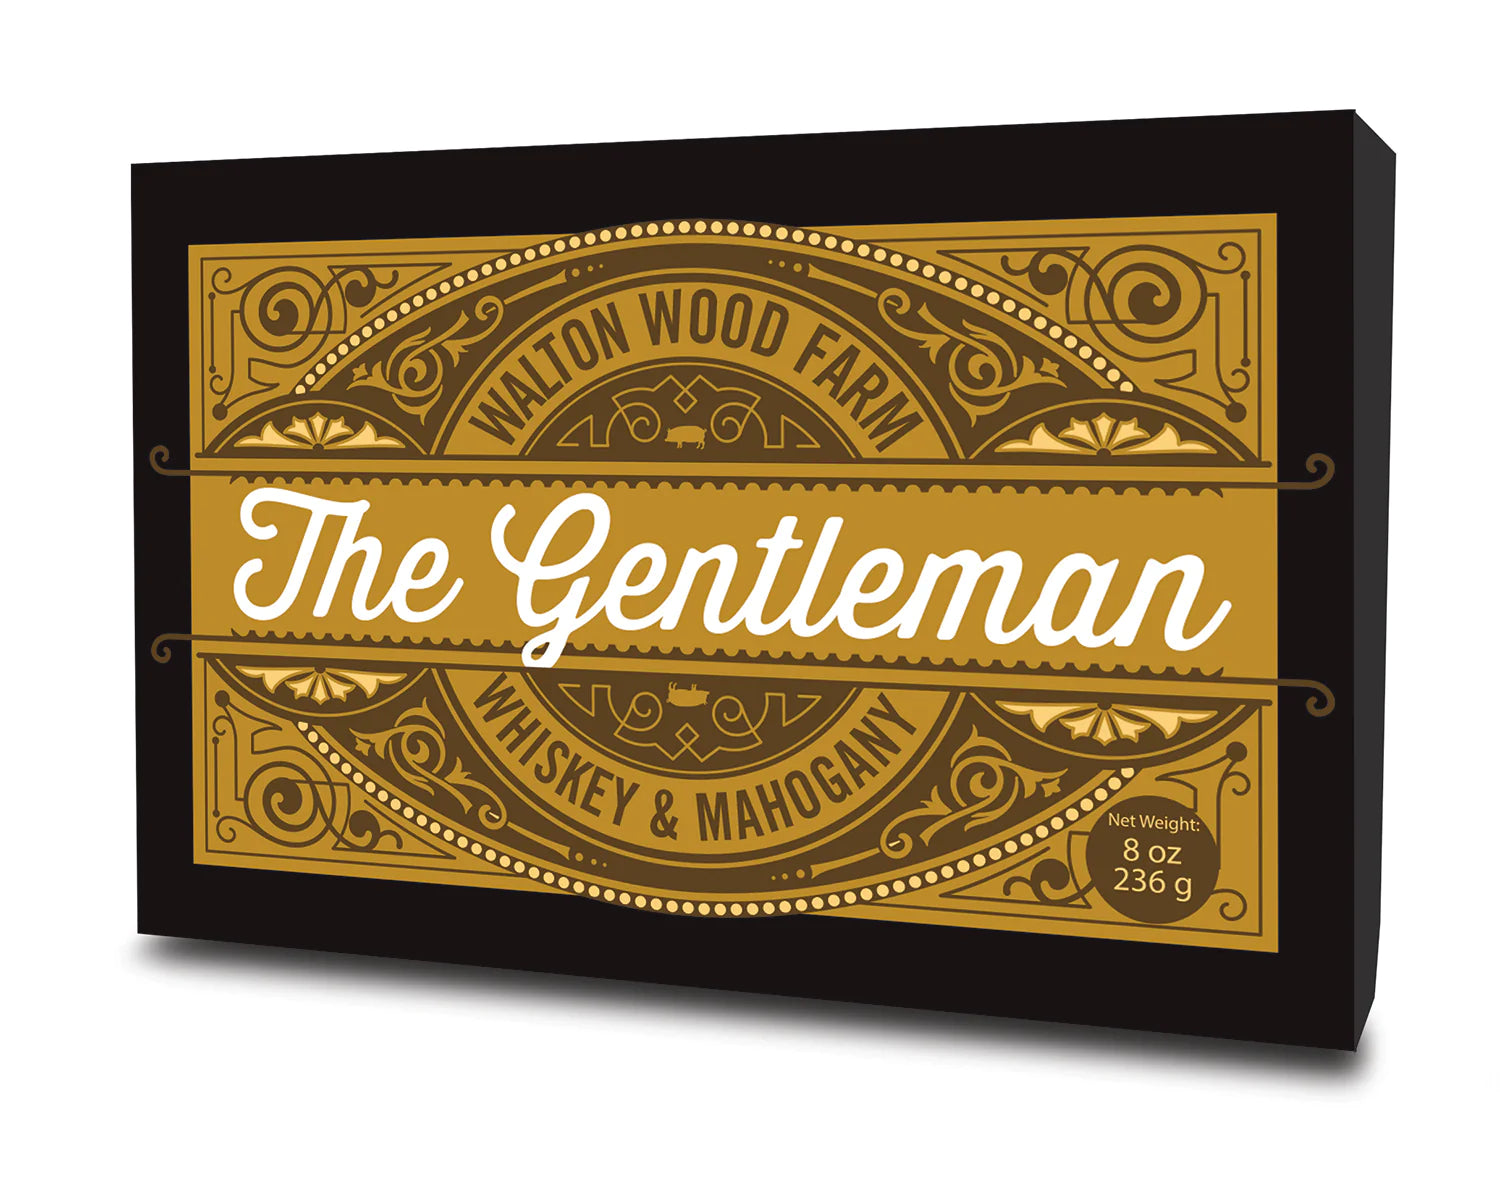 The Gentleman XXL Soap Bar - Whiskey & Mahogany | Walton Wood Farm